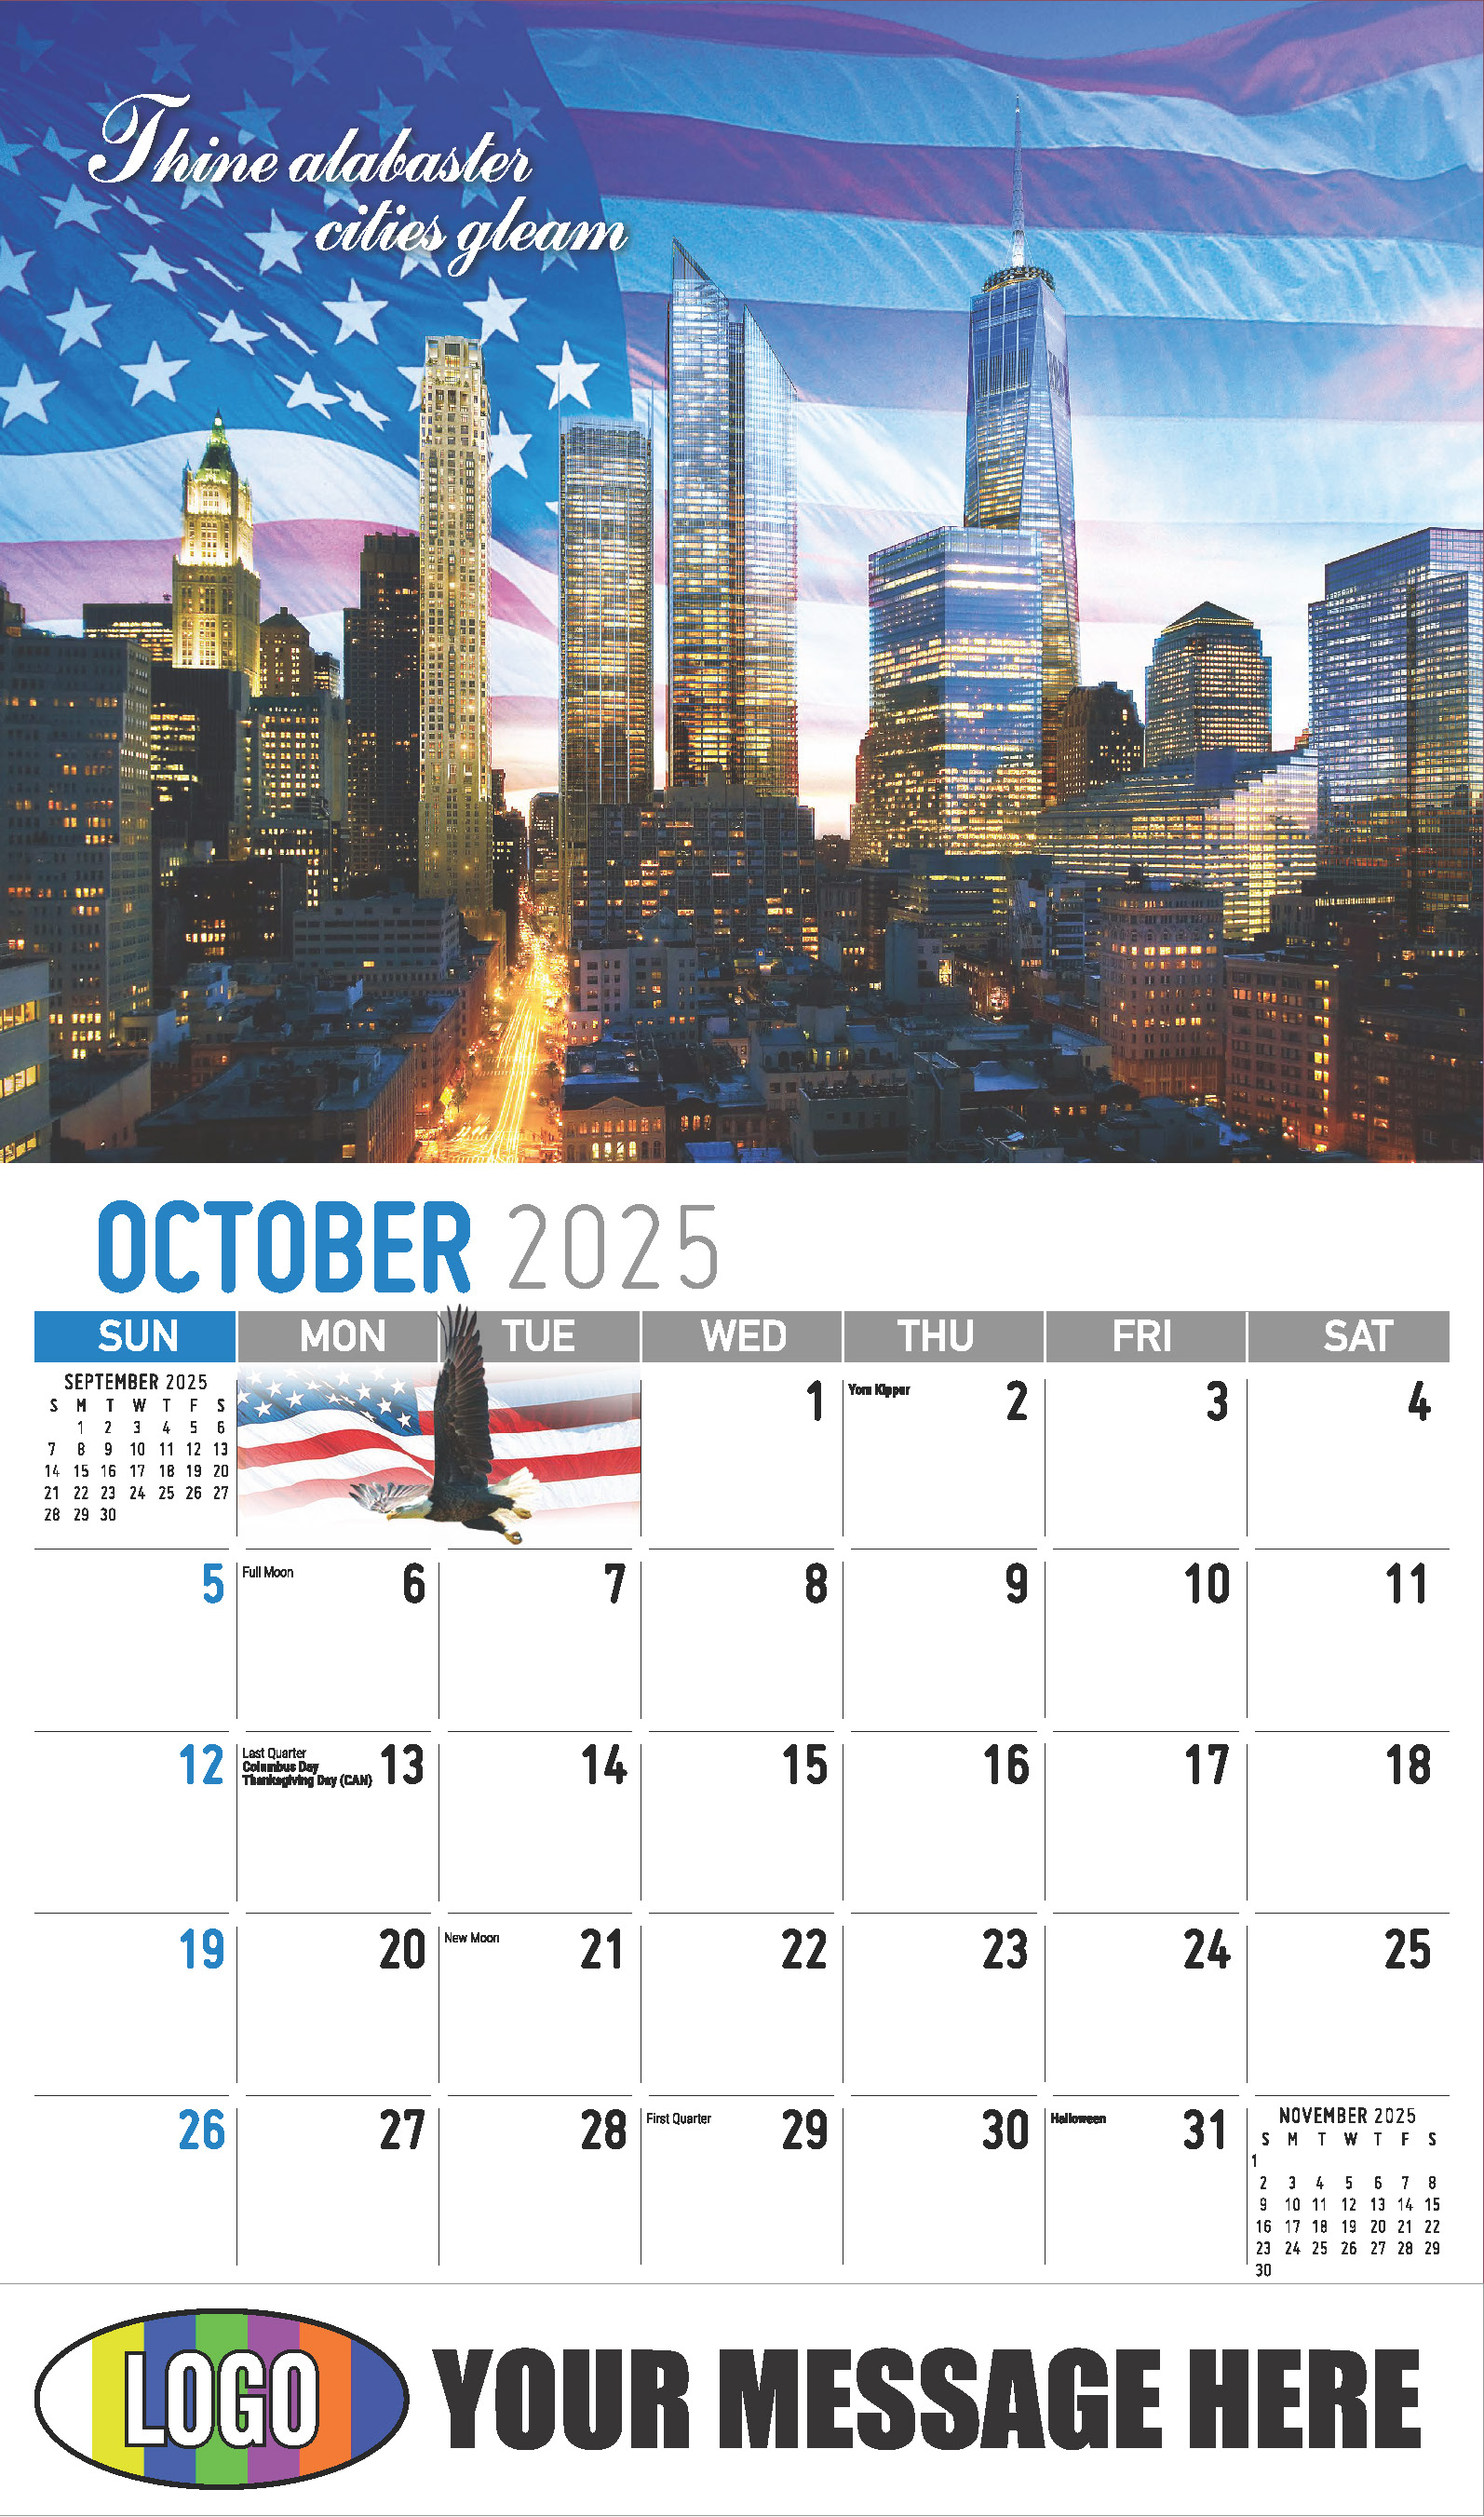 America the Beautiful  2025 Business Advertising Wall Calendar - October